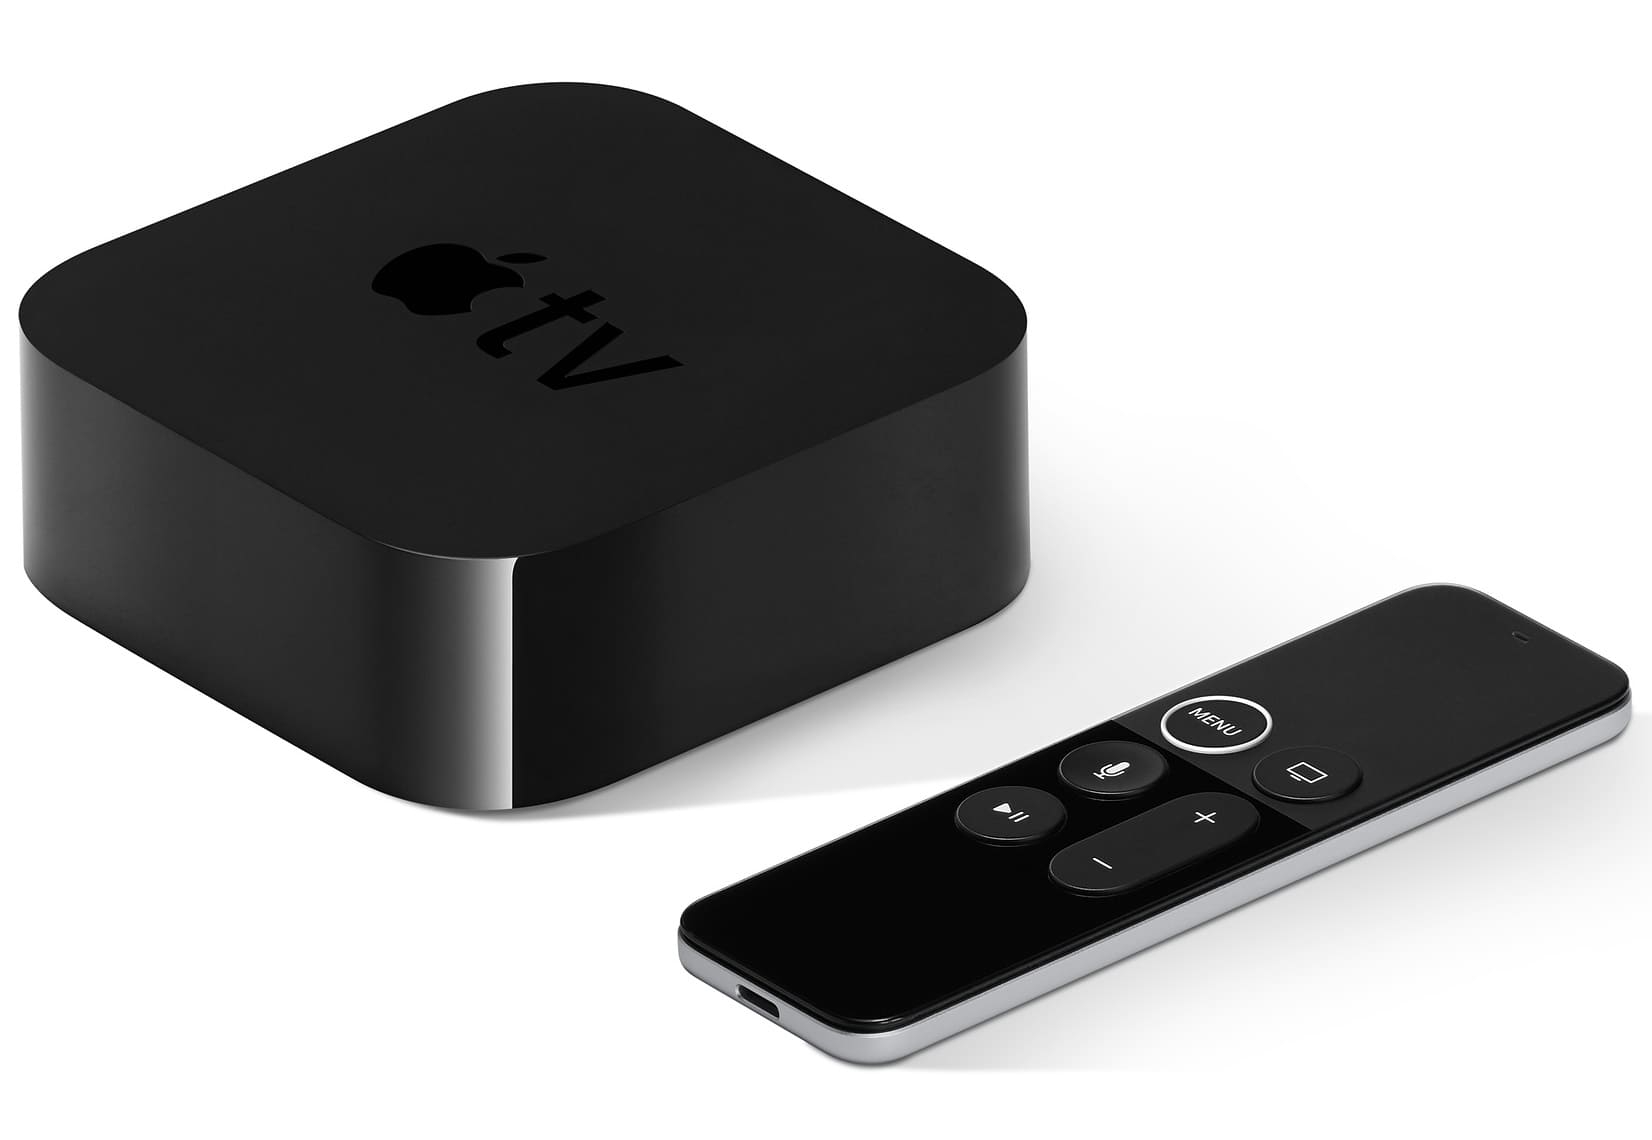 Медиаплеер Apple TV 4K 32Gb (MQD22RS/A)